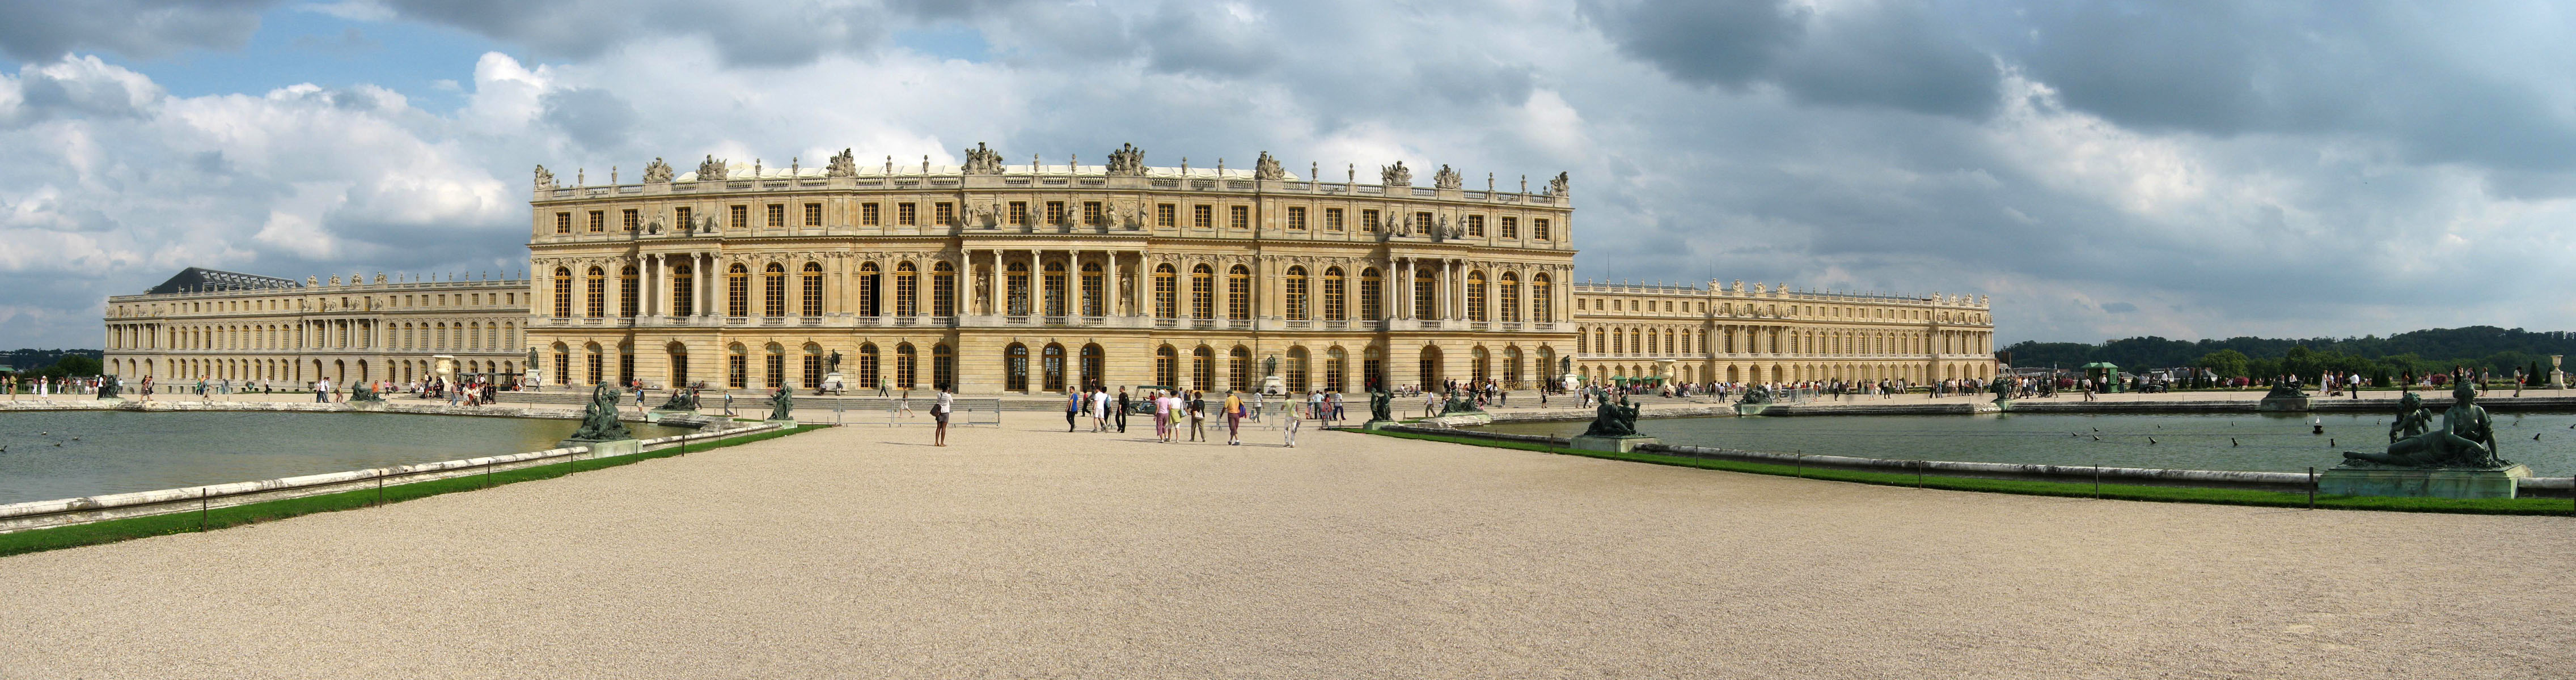 Castle of Versailles - France.jpg